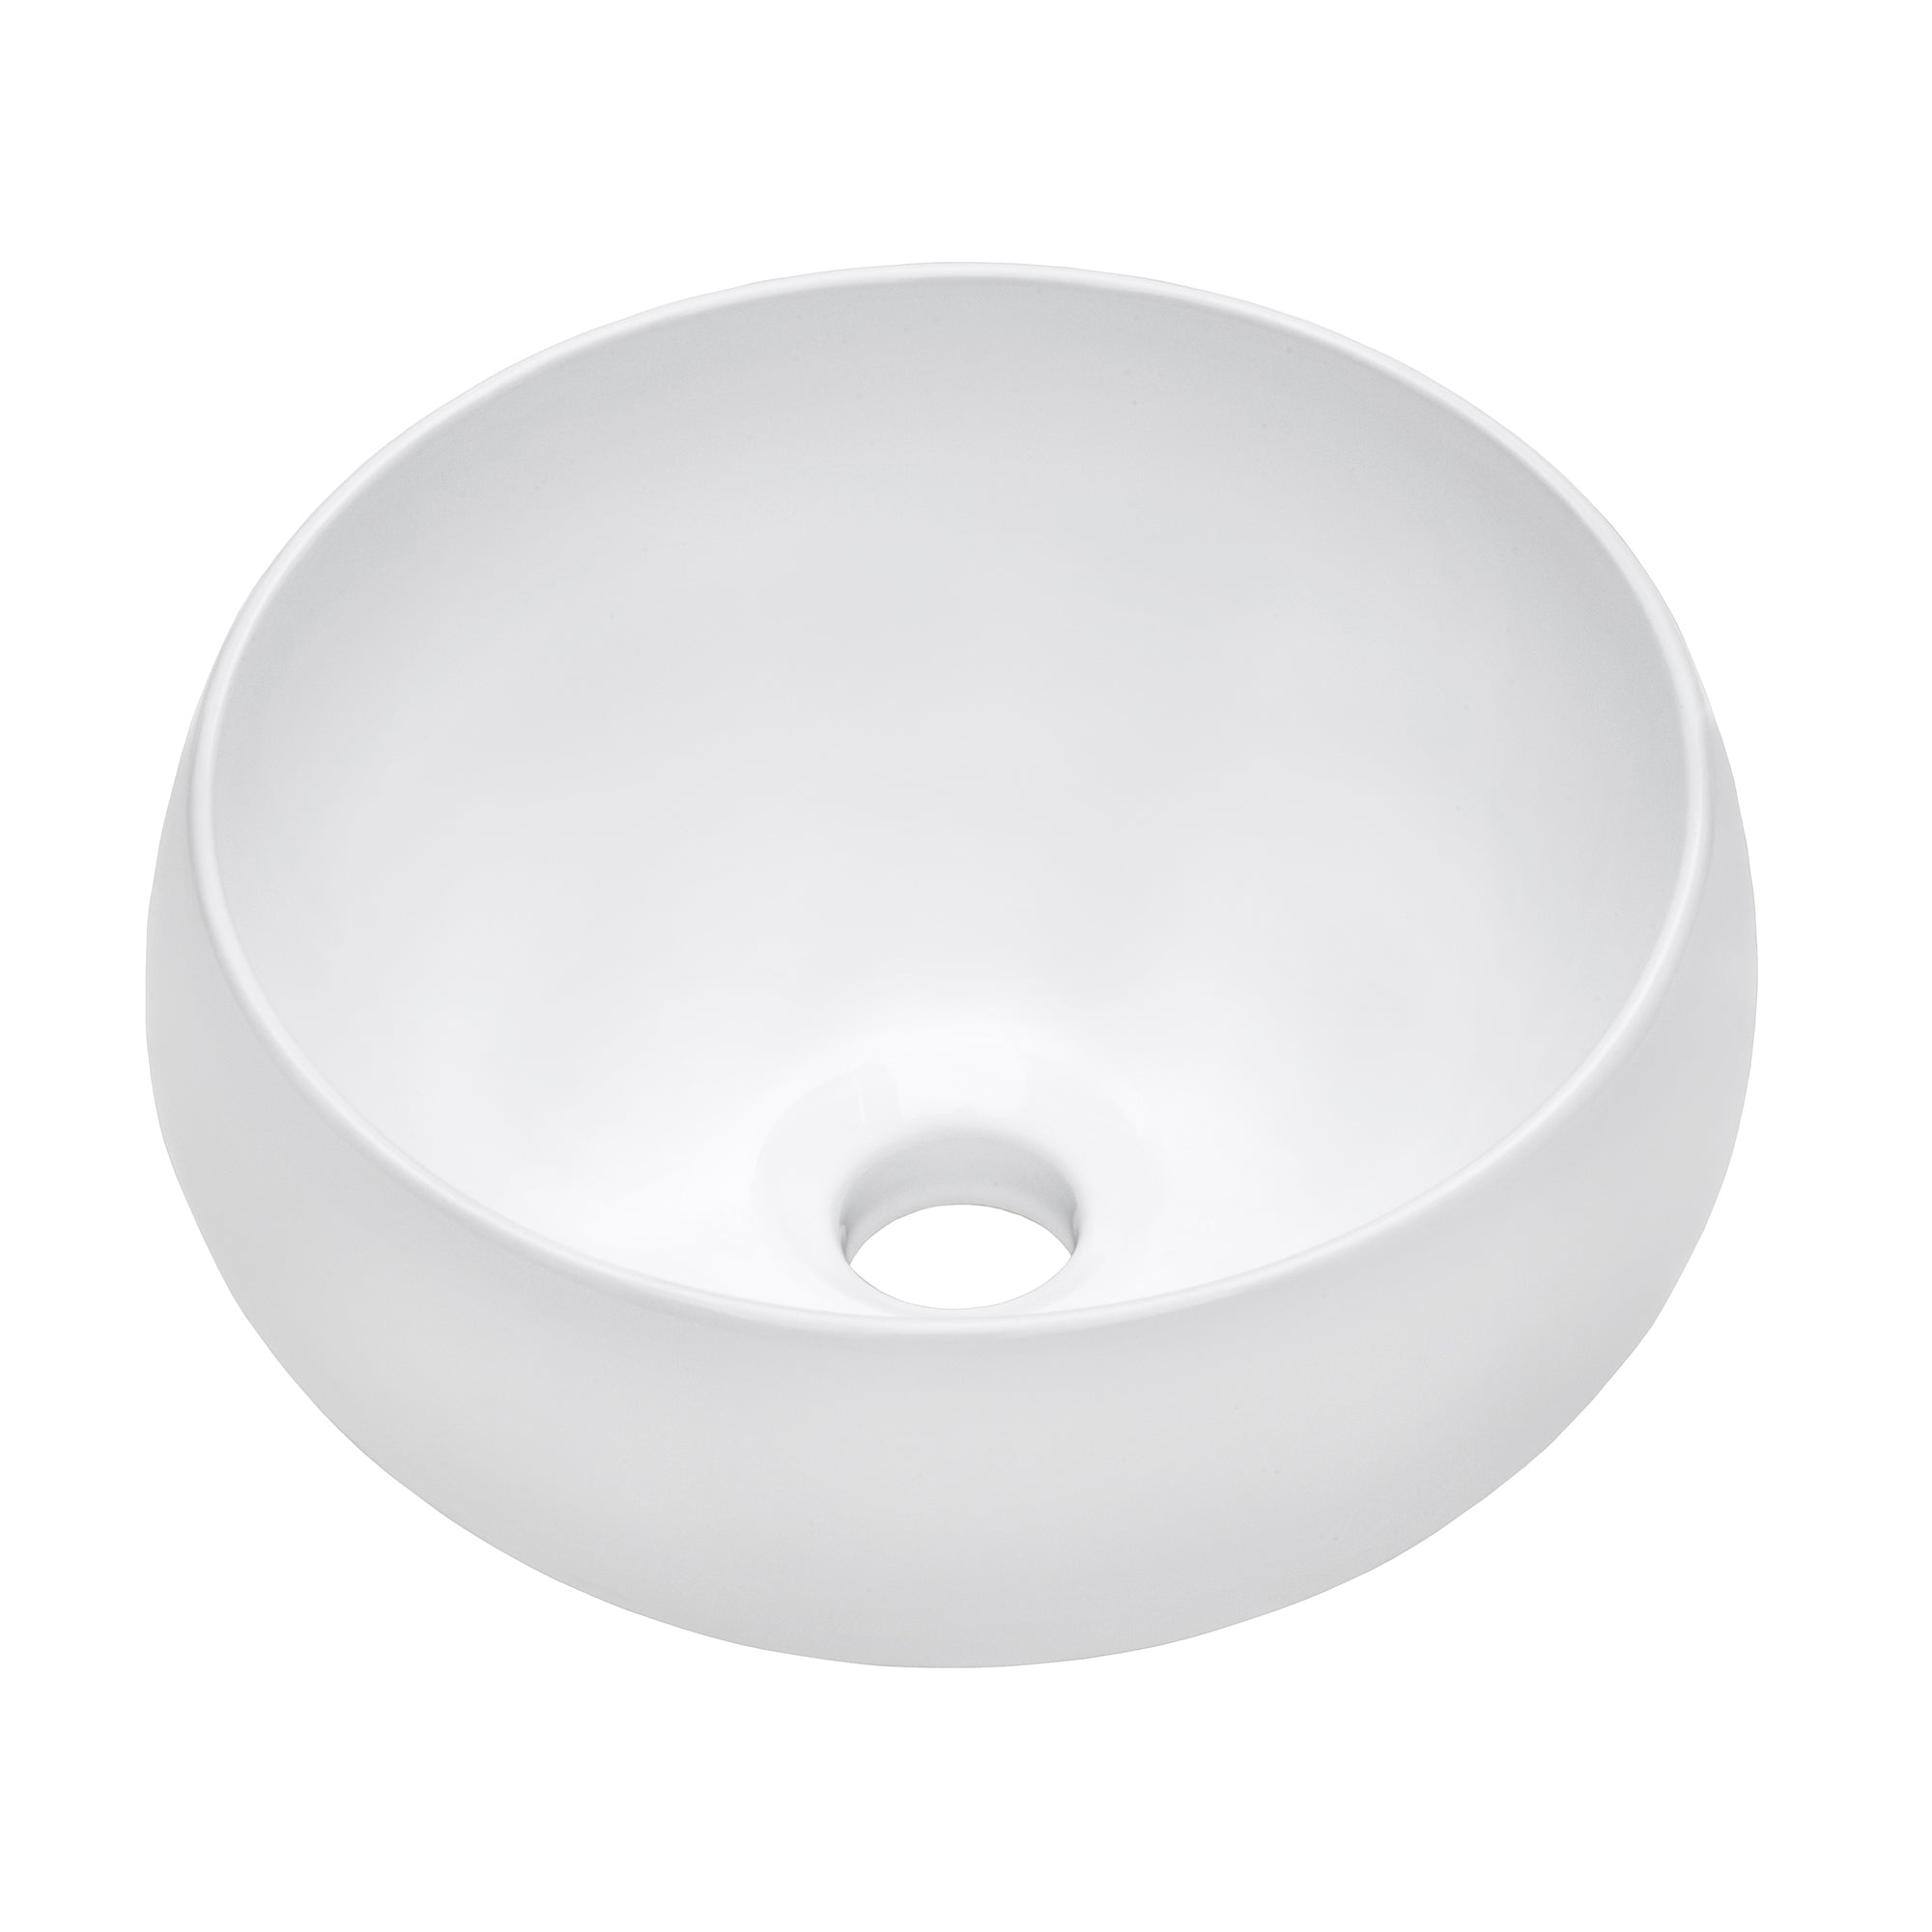 Bathroom Vessel Sink Round White Circular Above Counter Porcelain Ceramic